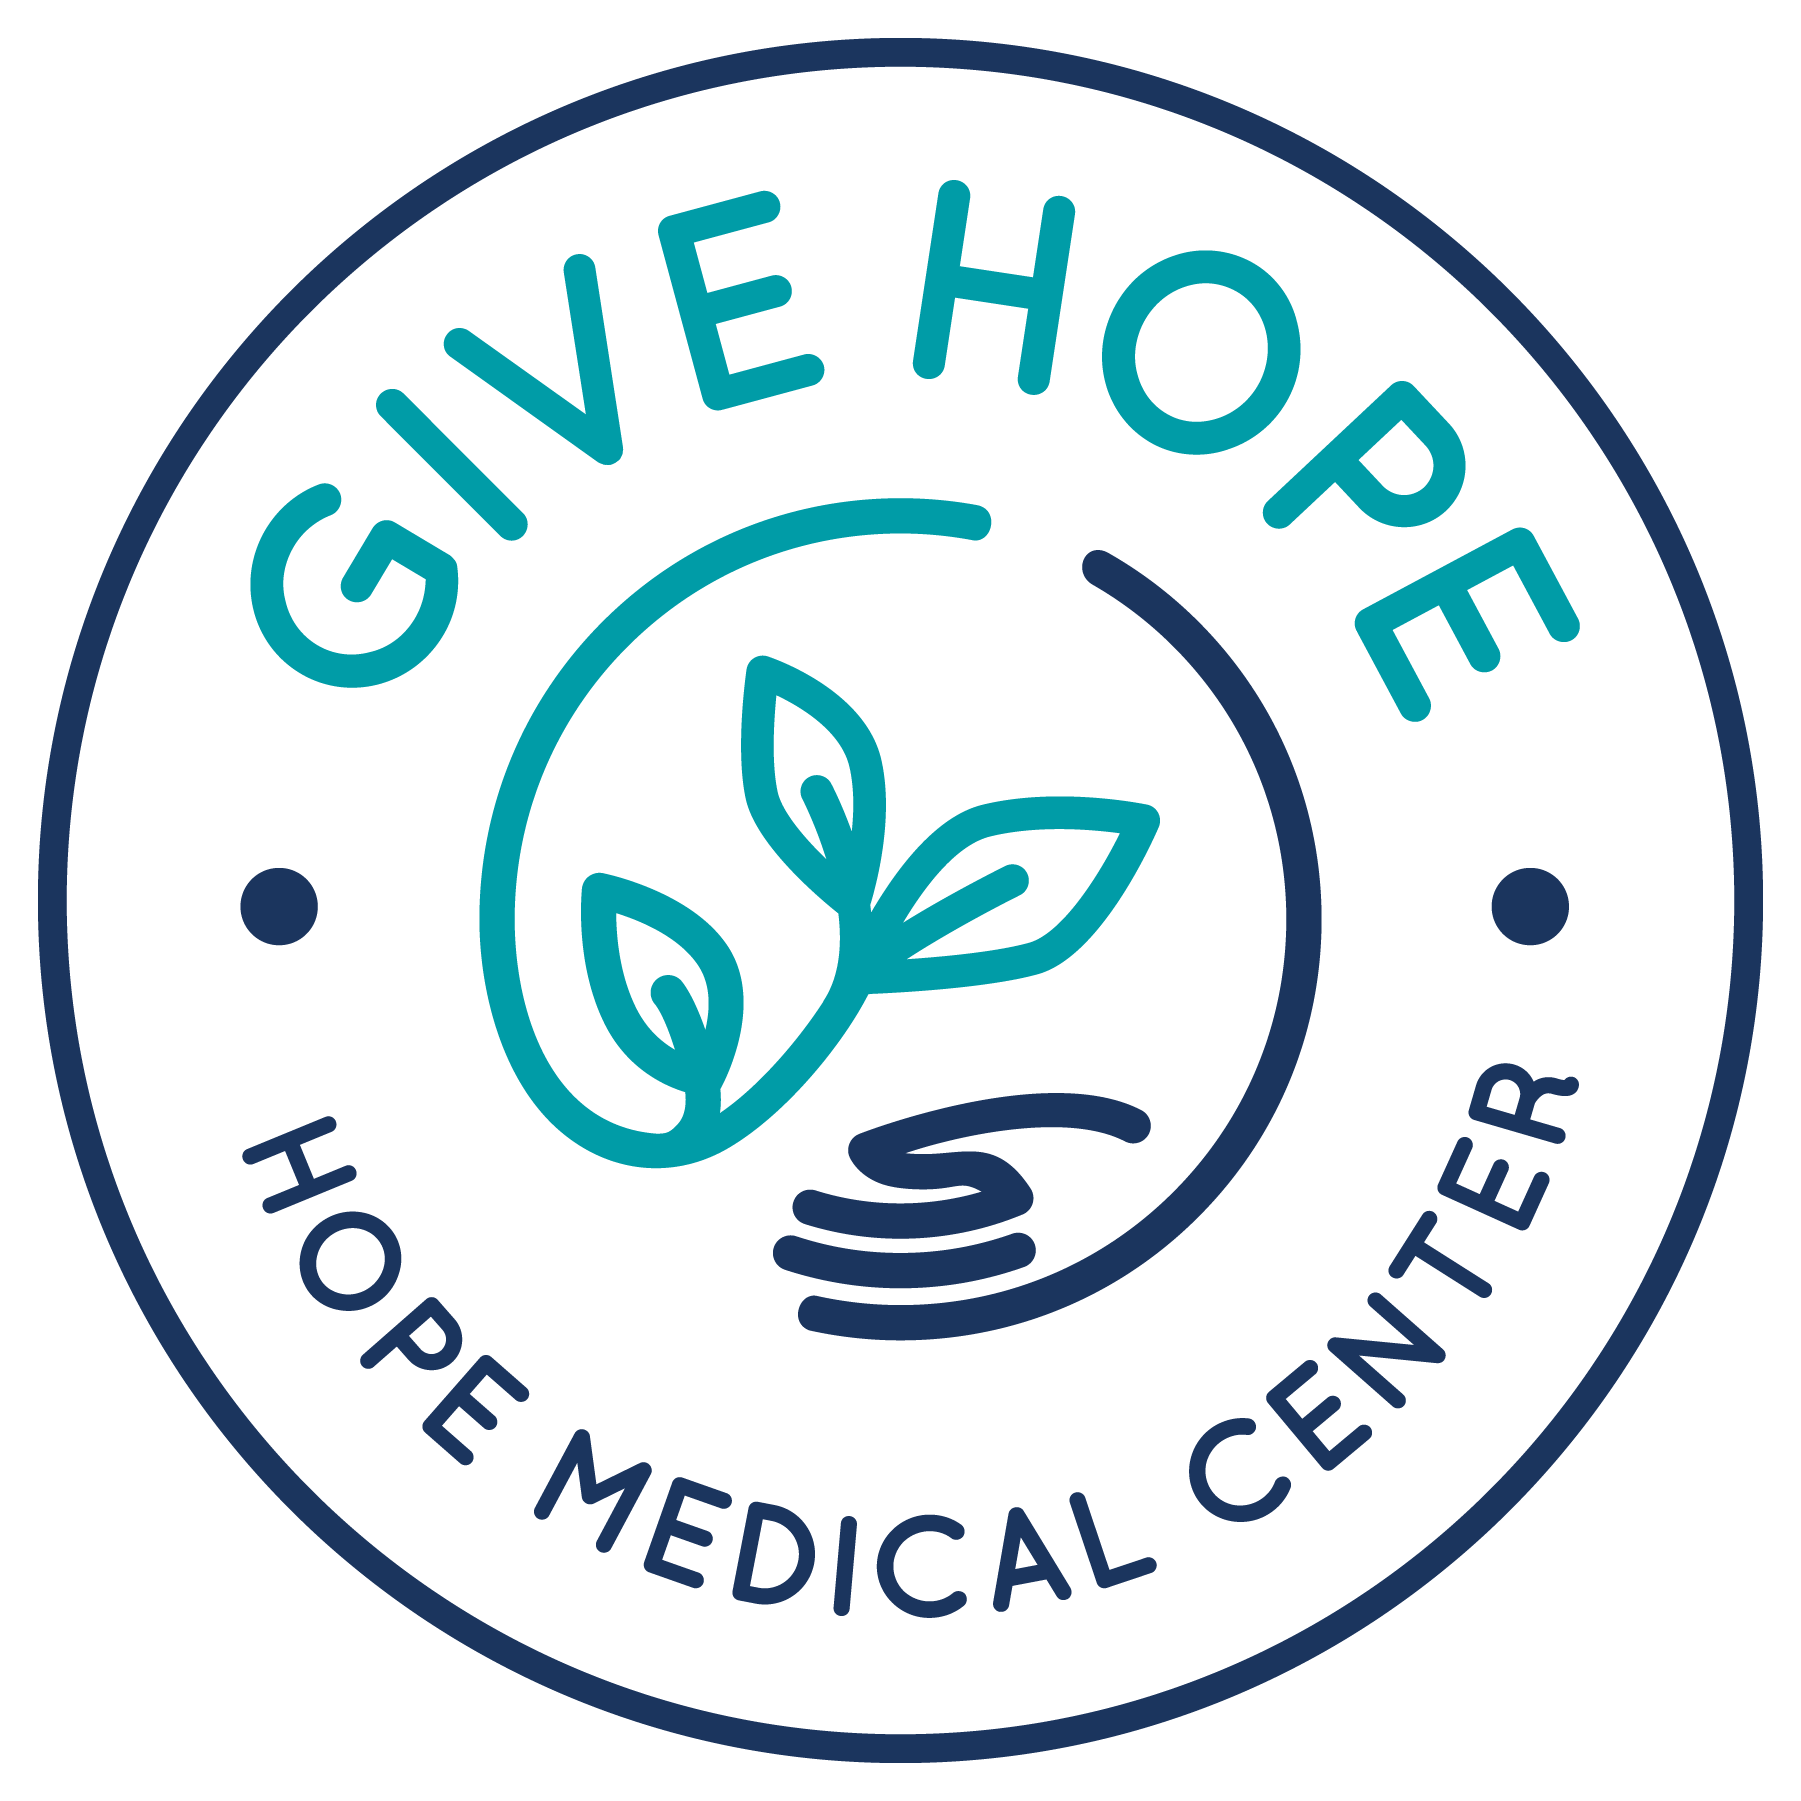 Gratis Healthcare – Providing Help • Creating Hope • Serving All